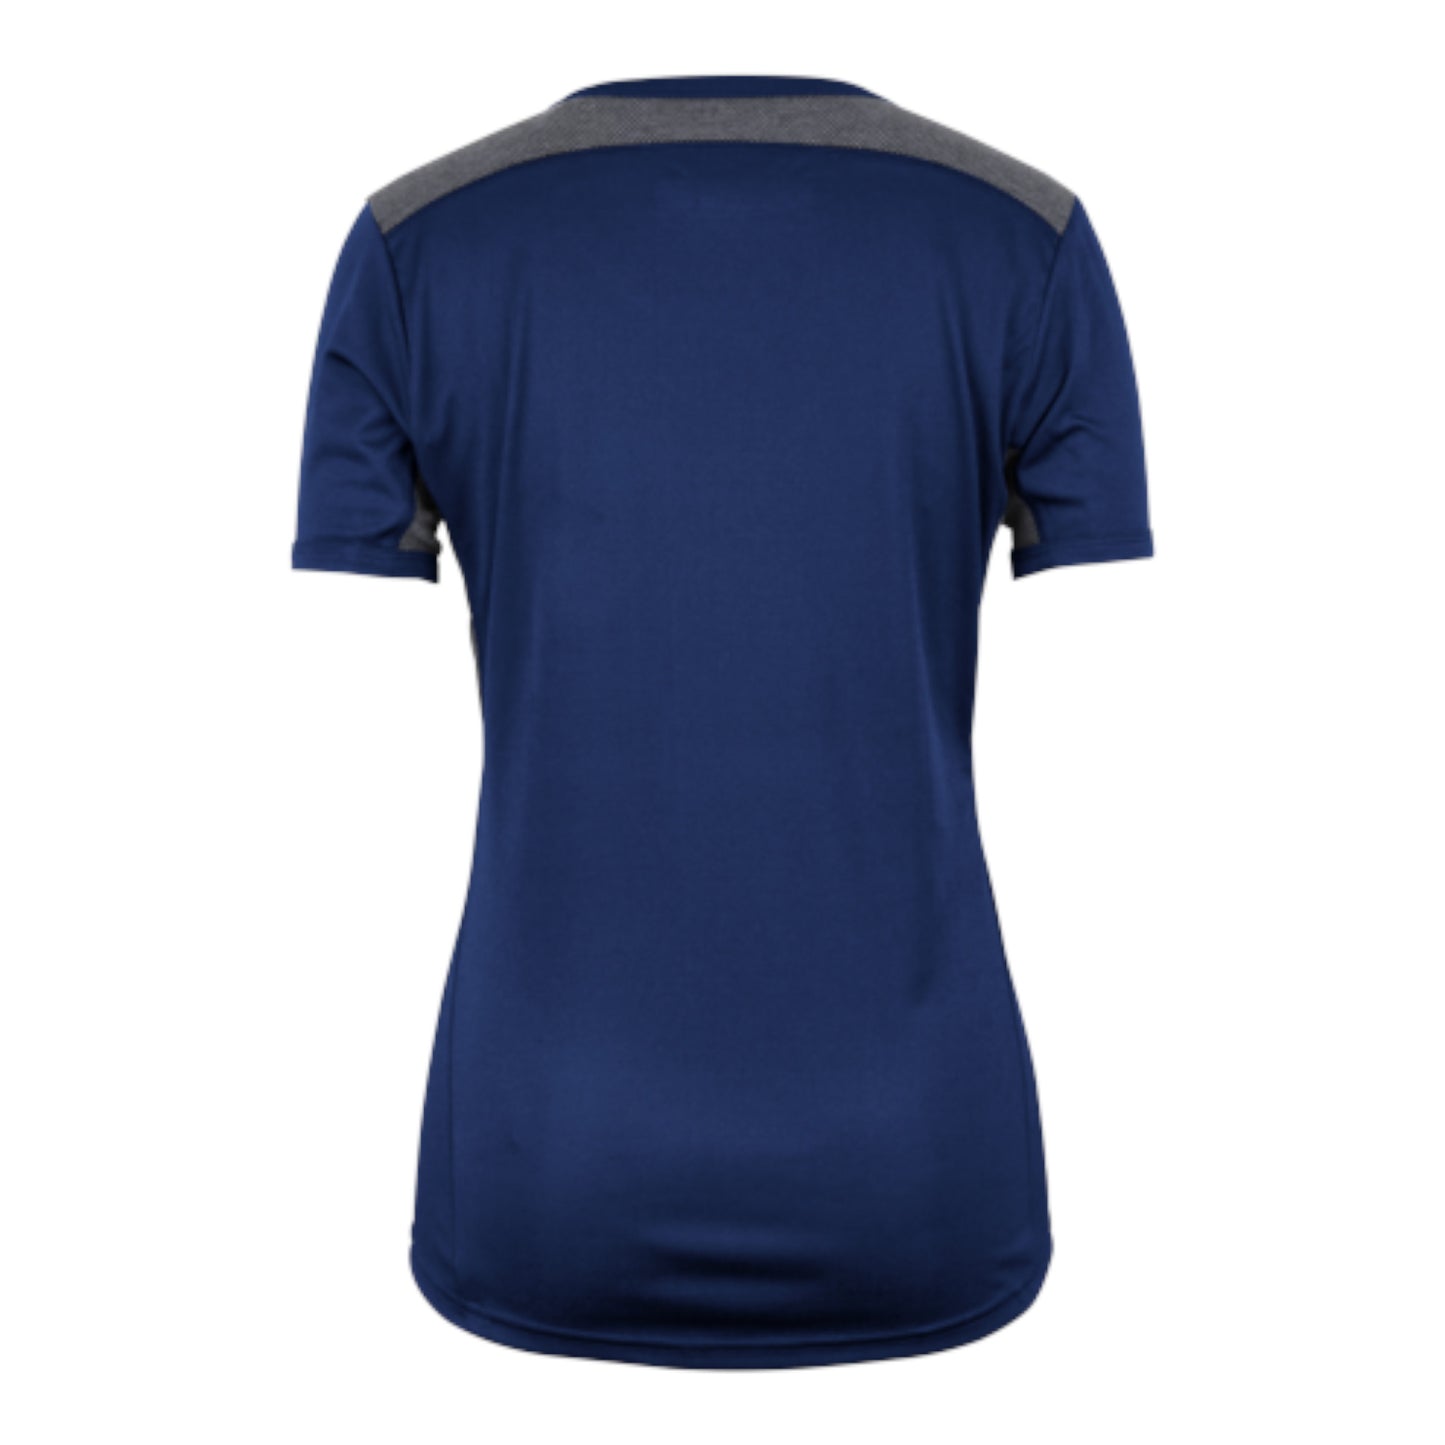 GN Ladies Pro Performance Tee Shirt (Navy)